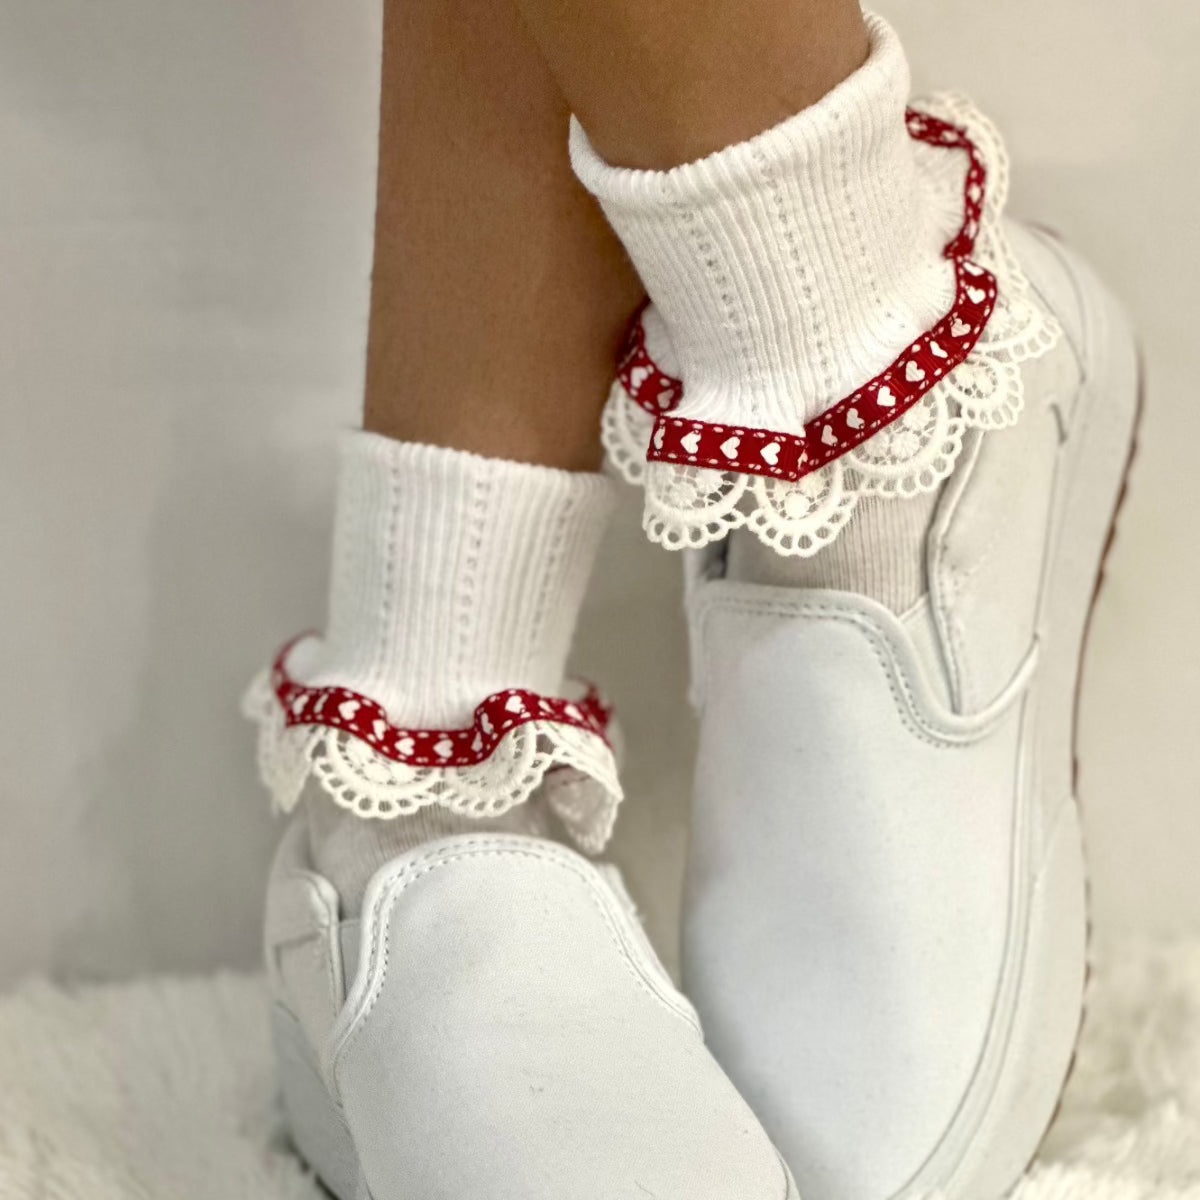 Heart Valentine socks for women, cool lace trimmed socks ladies